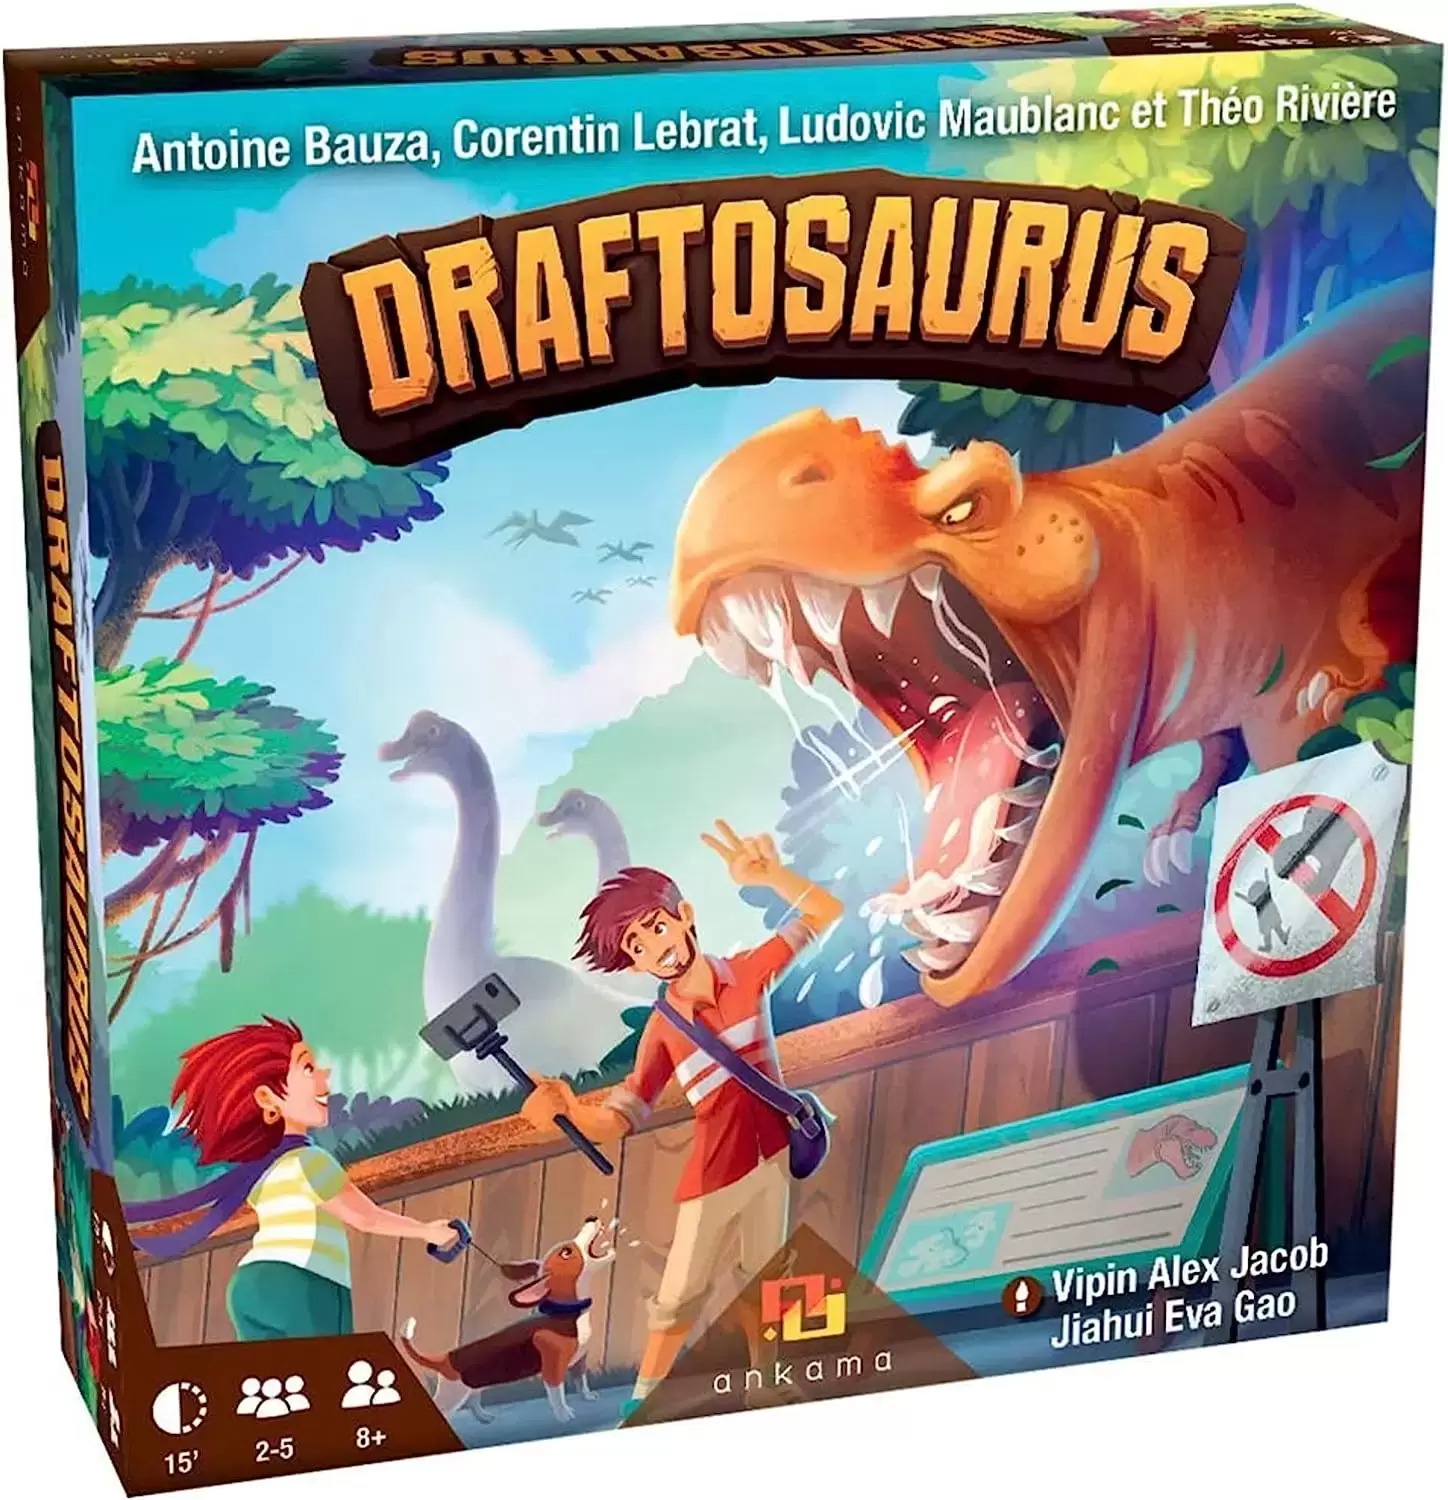 Autres jeux - Draftosaurus